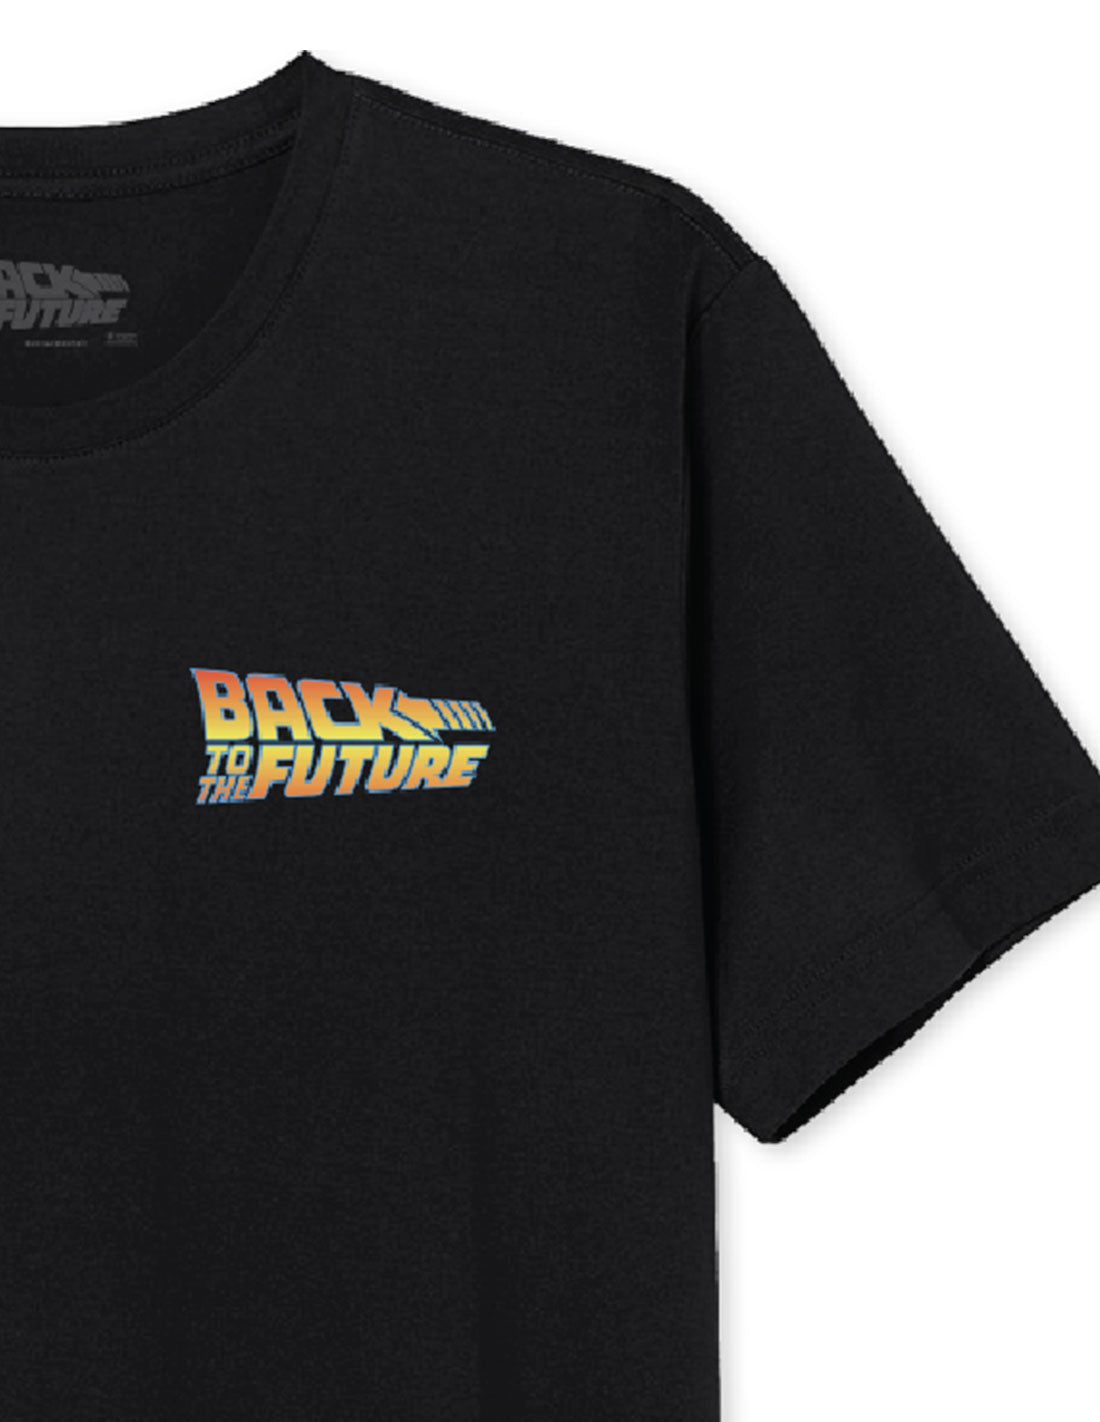 Back to the future t-shirt - DeLorean of the Future